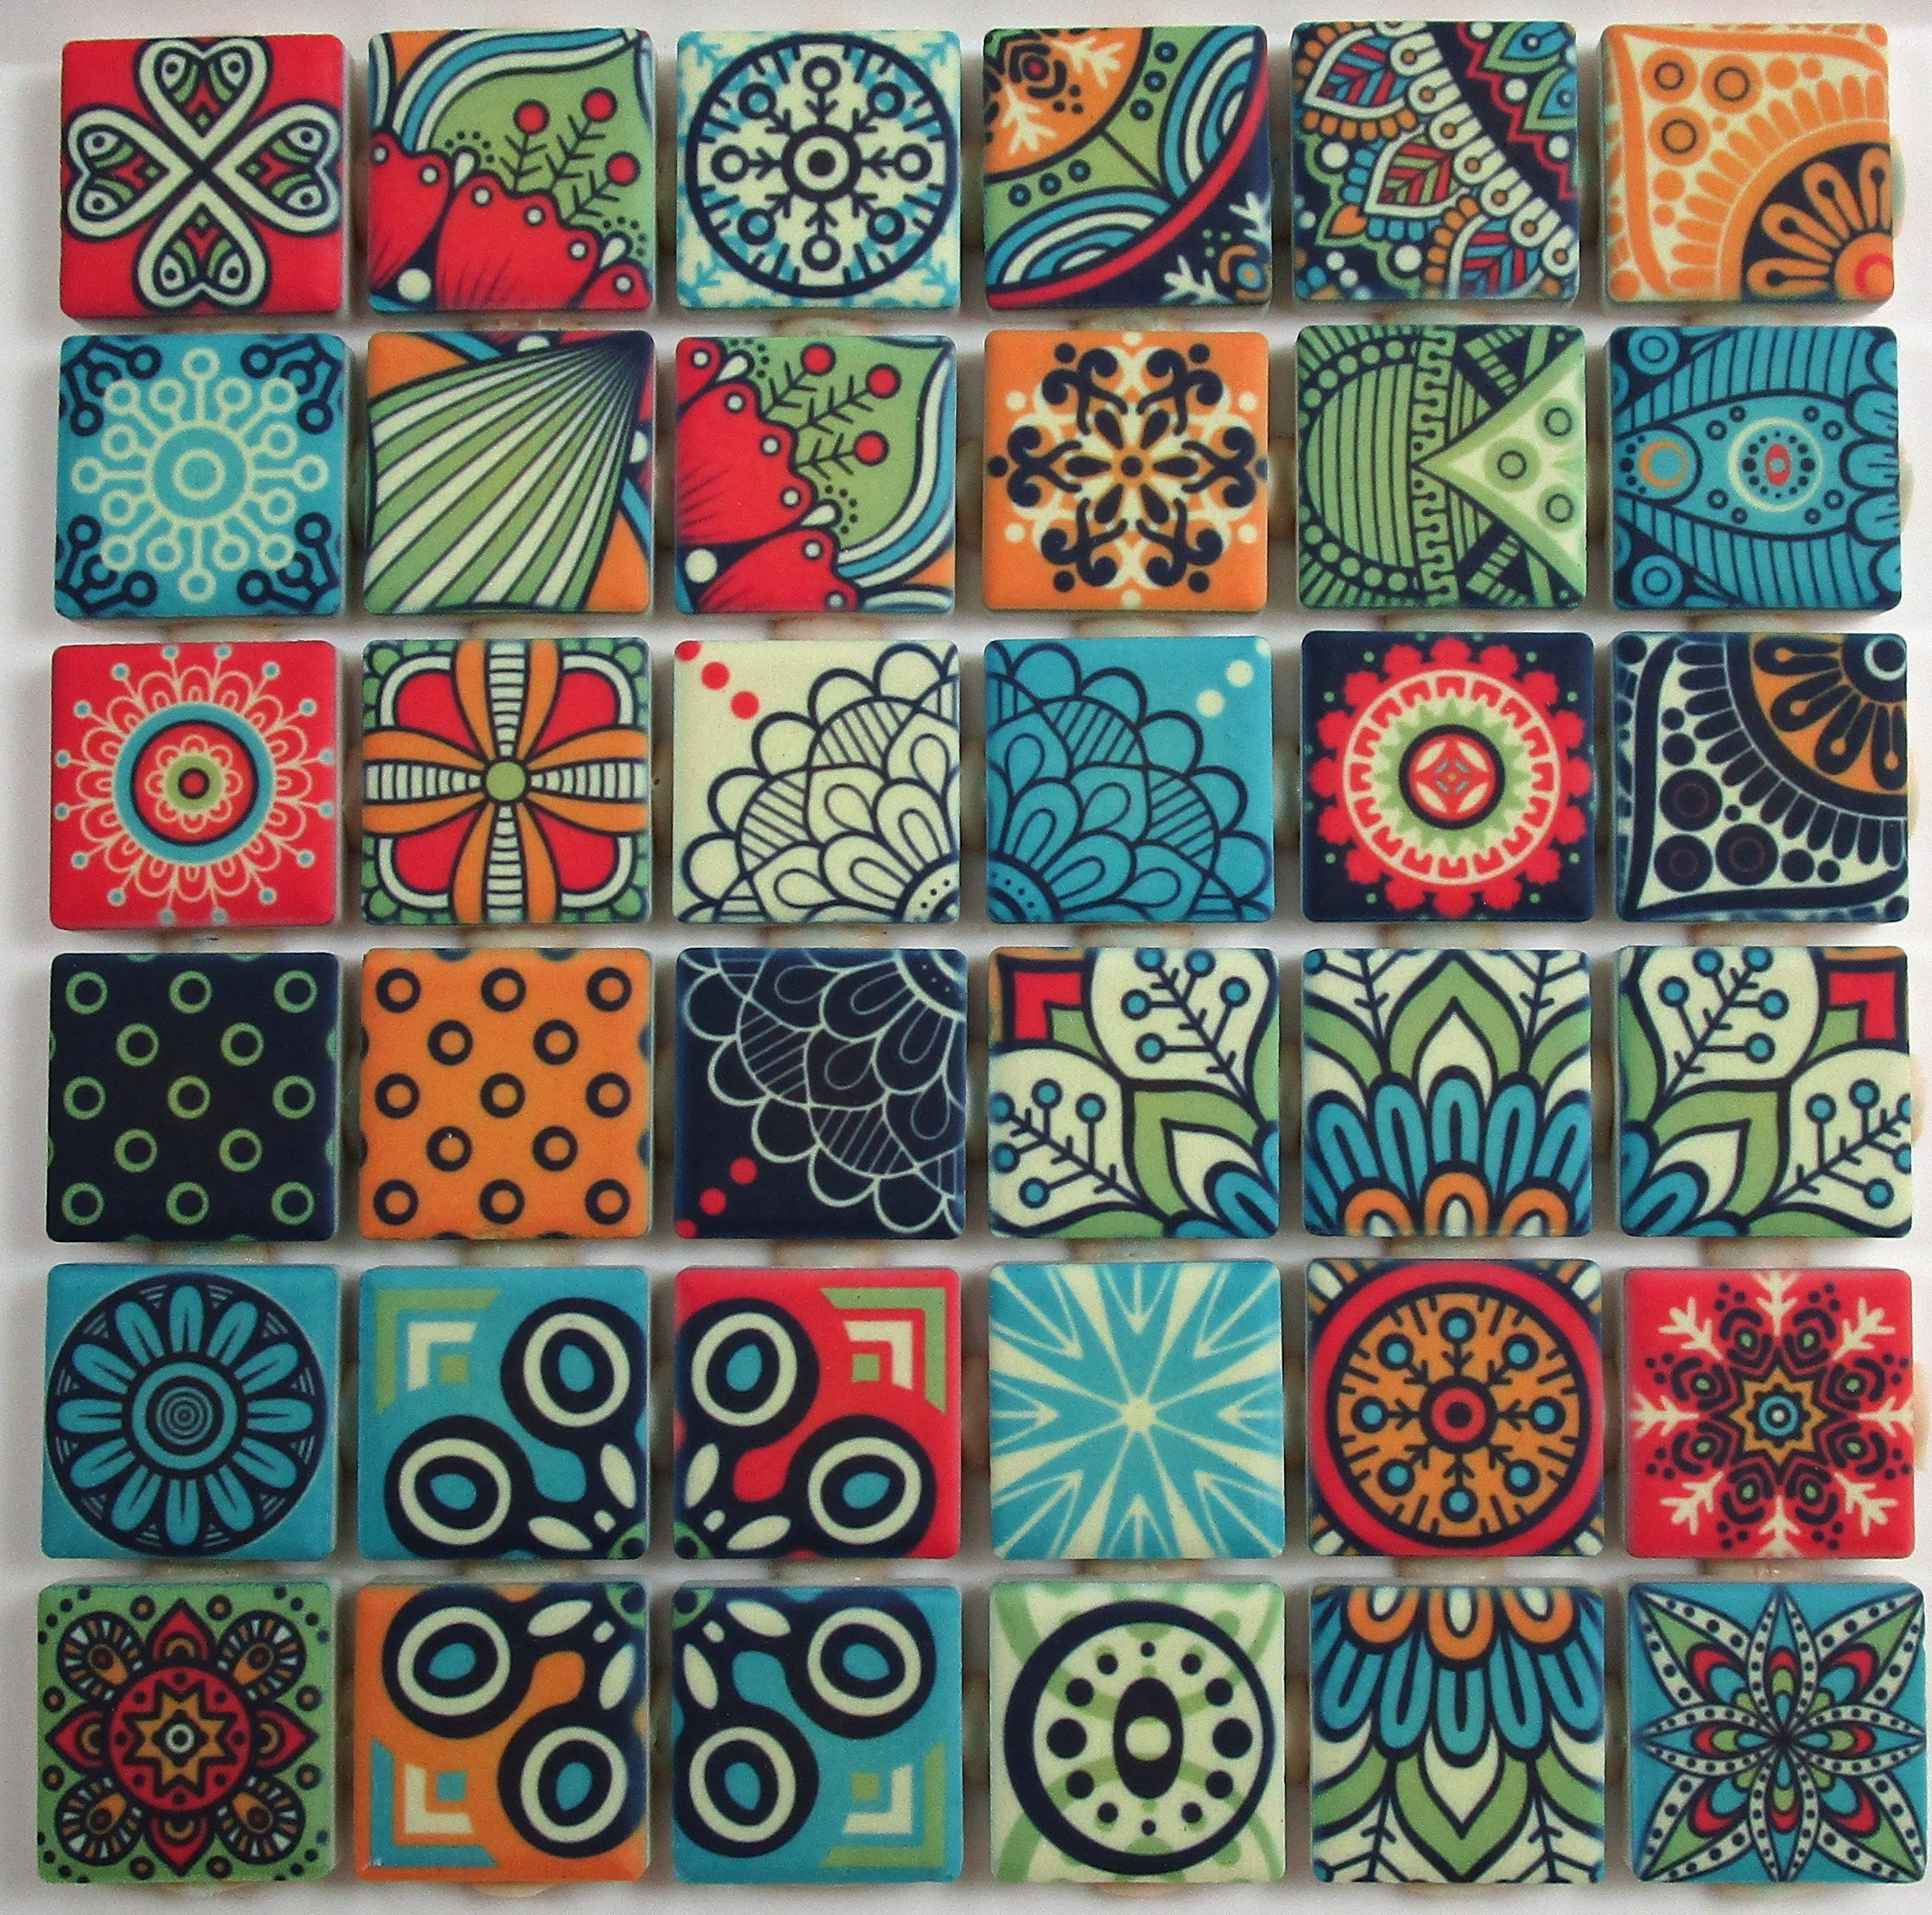 Colorful Glass Square Mosaic Tiles DIY Crafts Home Decorations Arts Tiles  Pieces